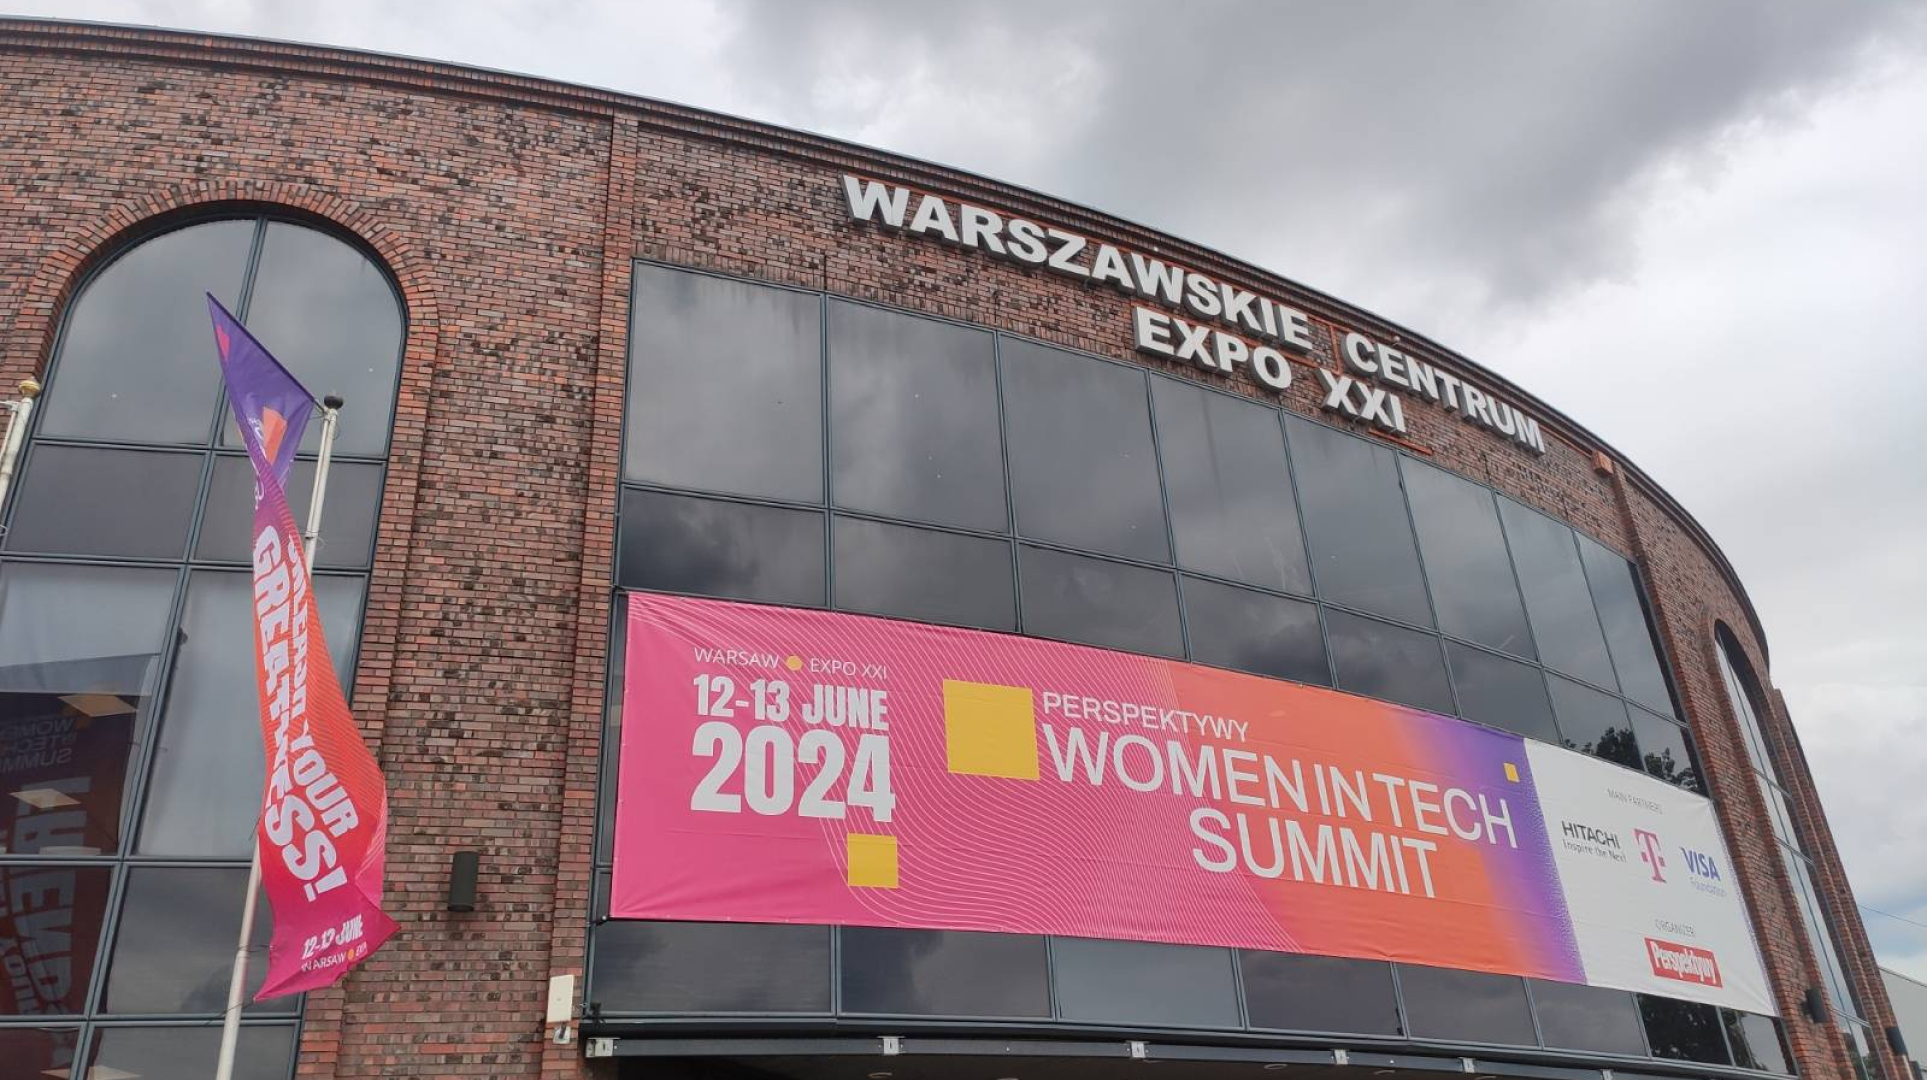 Perspektywy Women in Tech Summit 2024 - relacja z wydarzenia